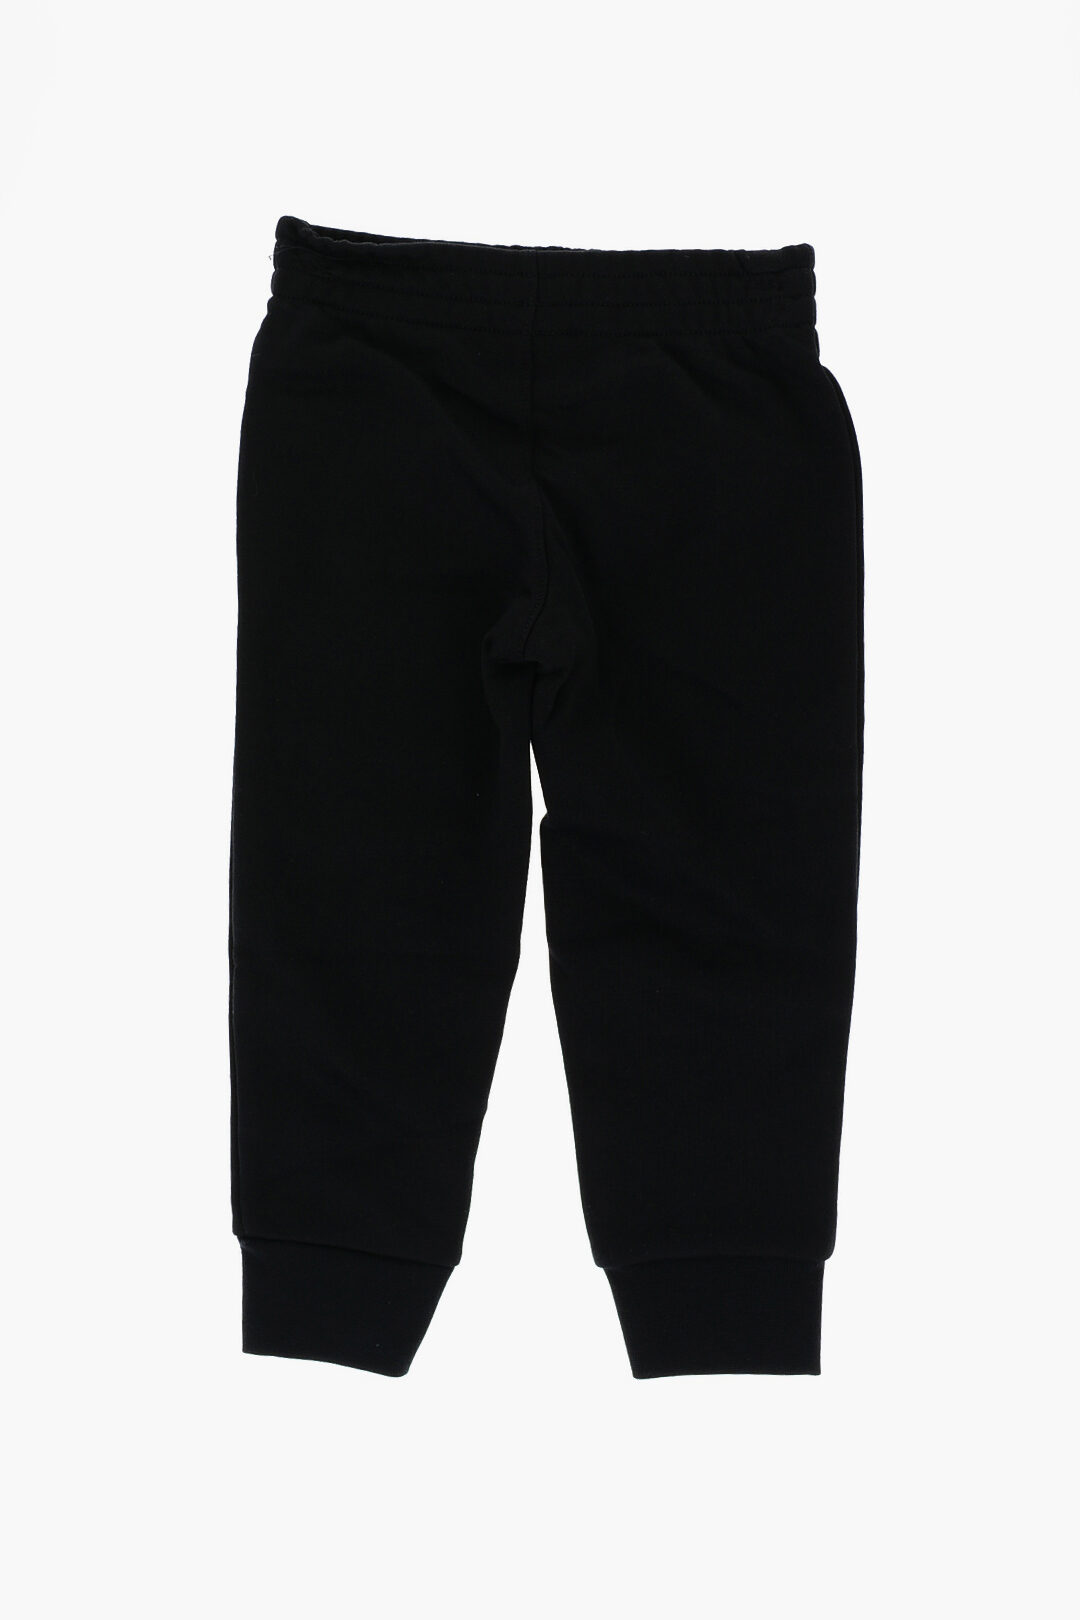 Nike KIDS Fleeced-Cotton Shorts and Crew-Neck T-shirt Set boys - Glamood  Outlet